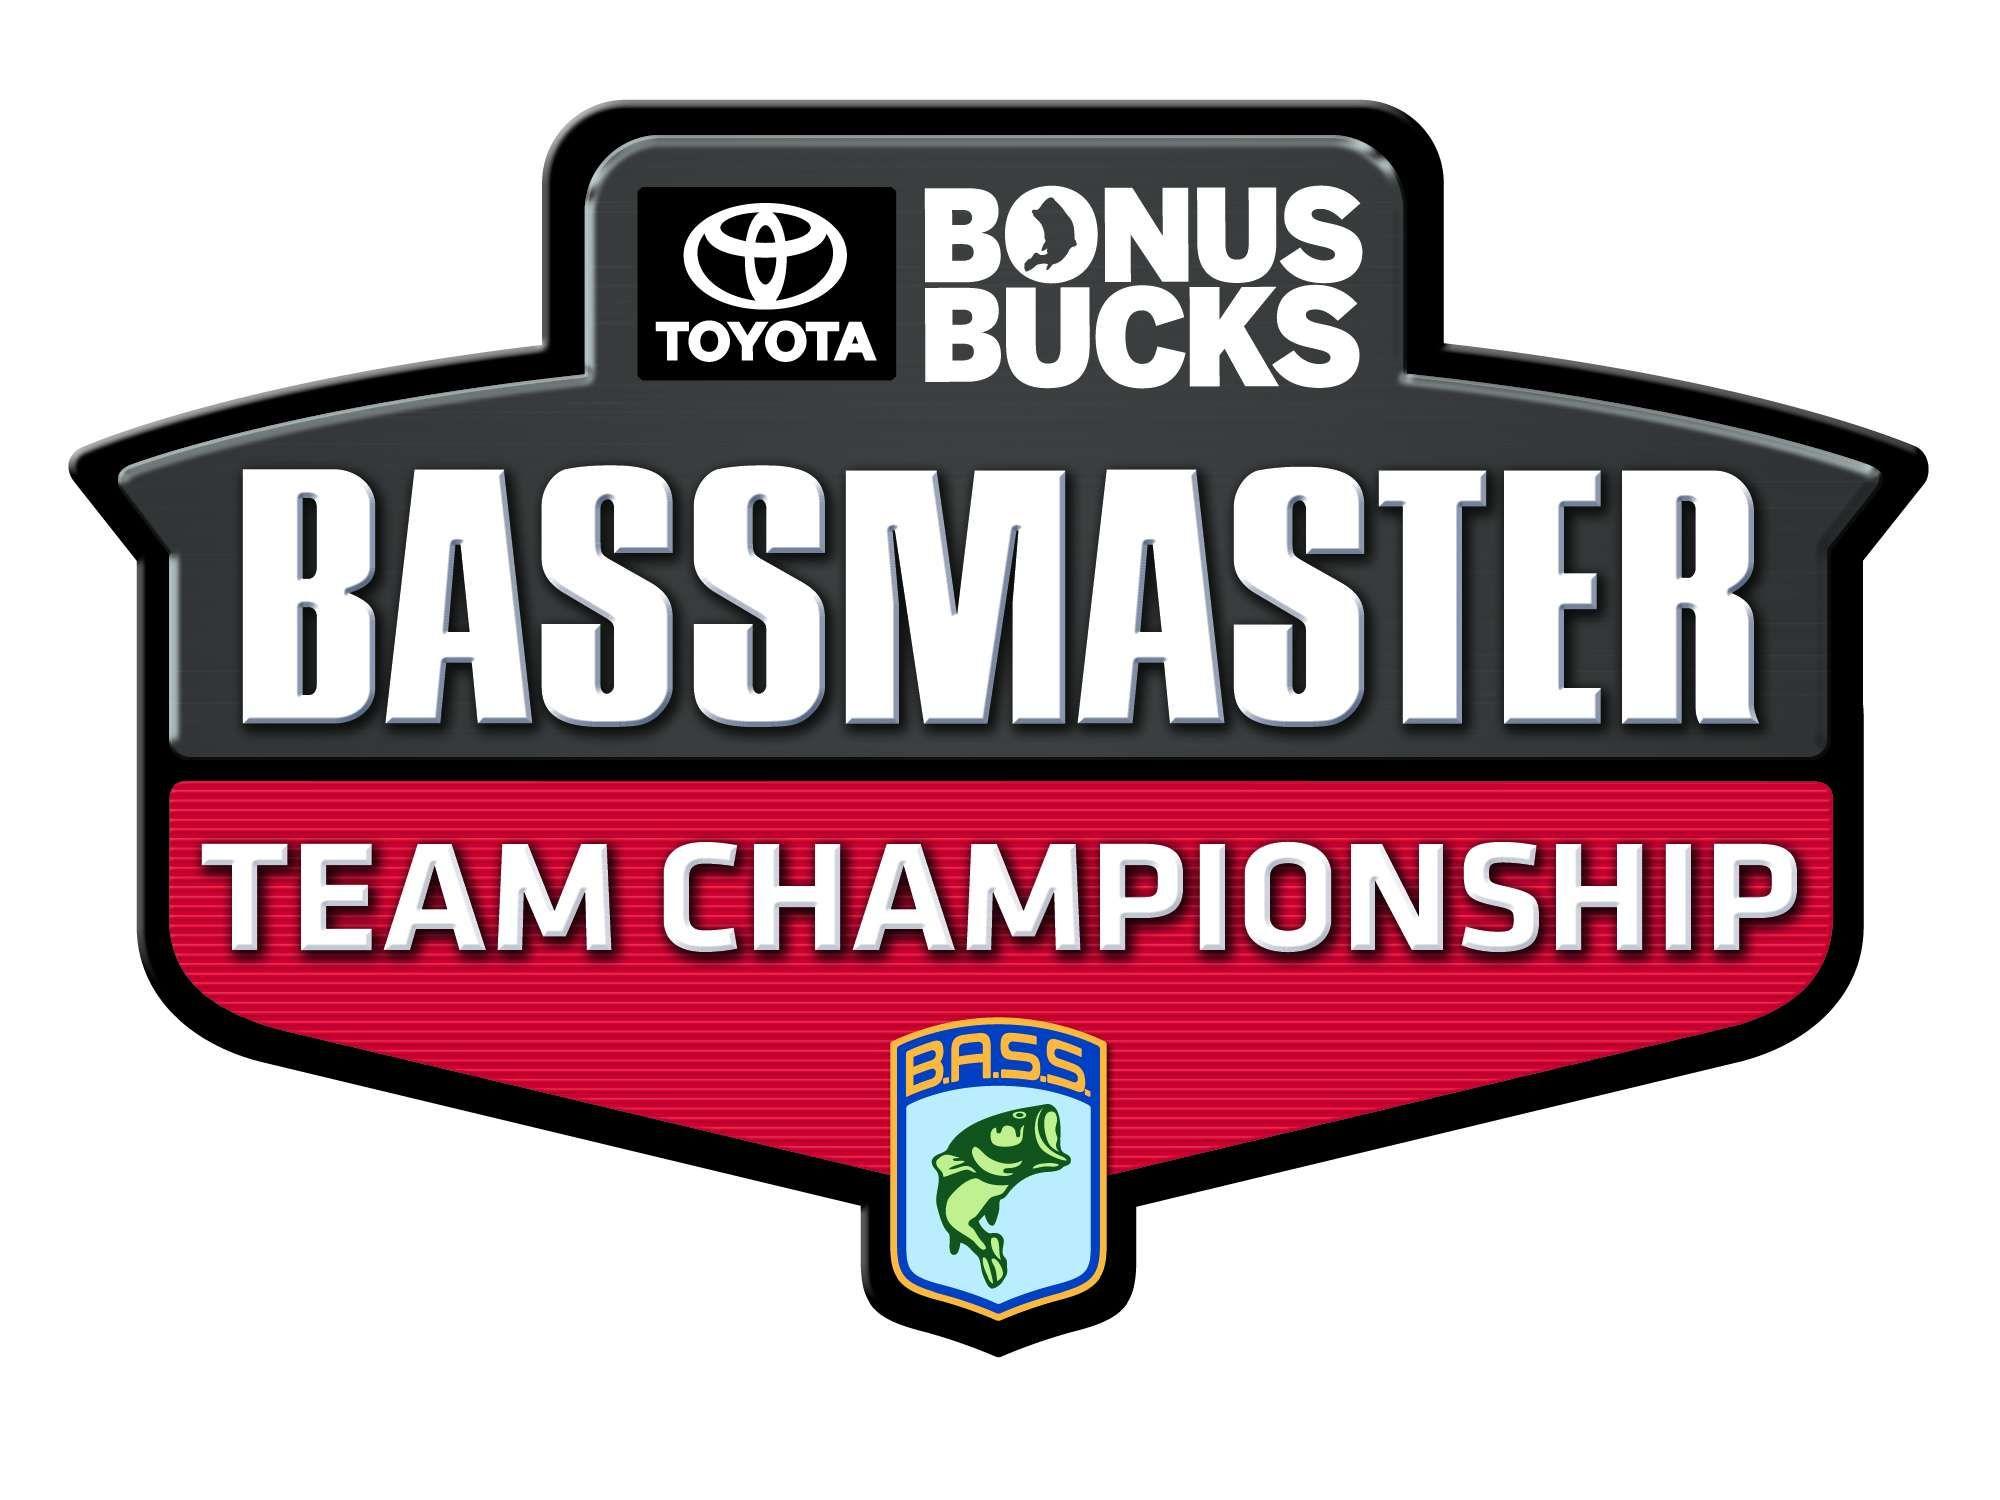 Bassmaster Logo - B.A.S.S. launches Team Championship | Bassmaster